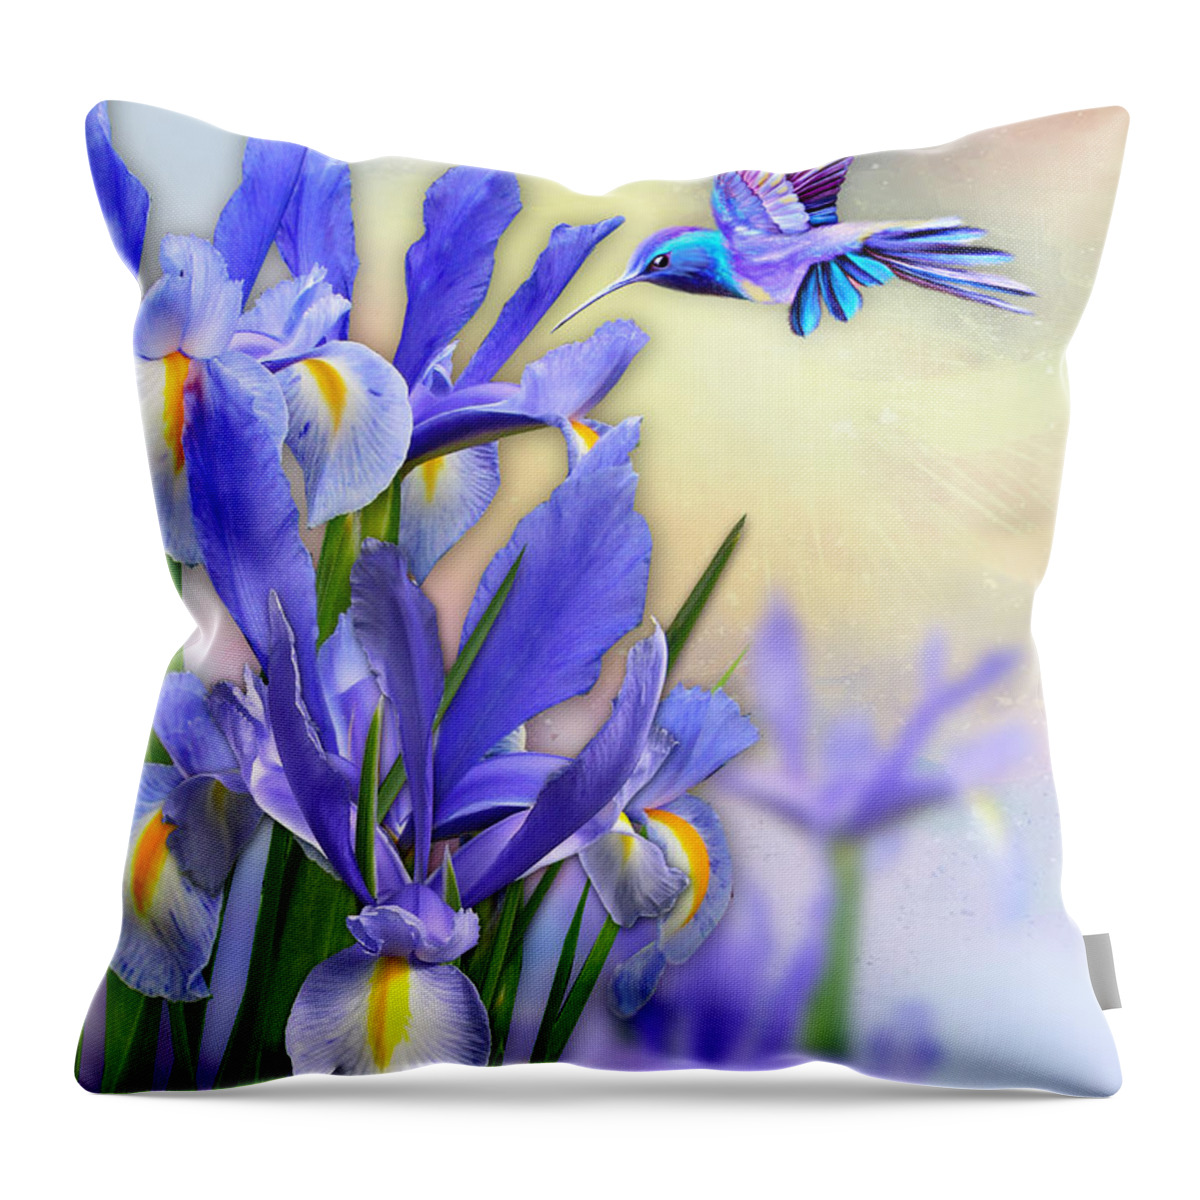 Hummingbird Throw Pillow featuring the digital art Hummingbird on Iris by Morag Bates